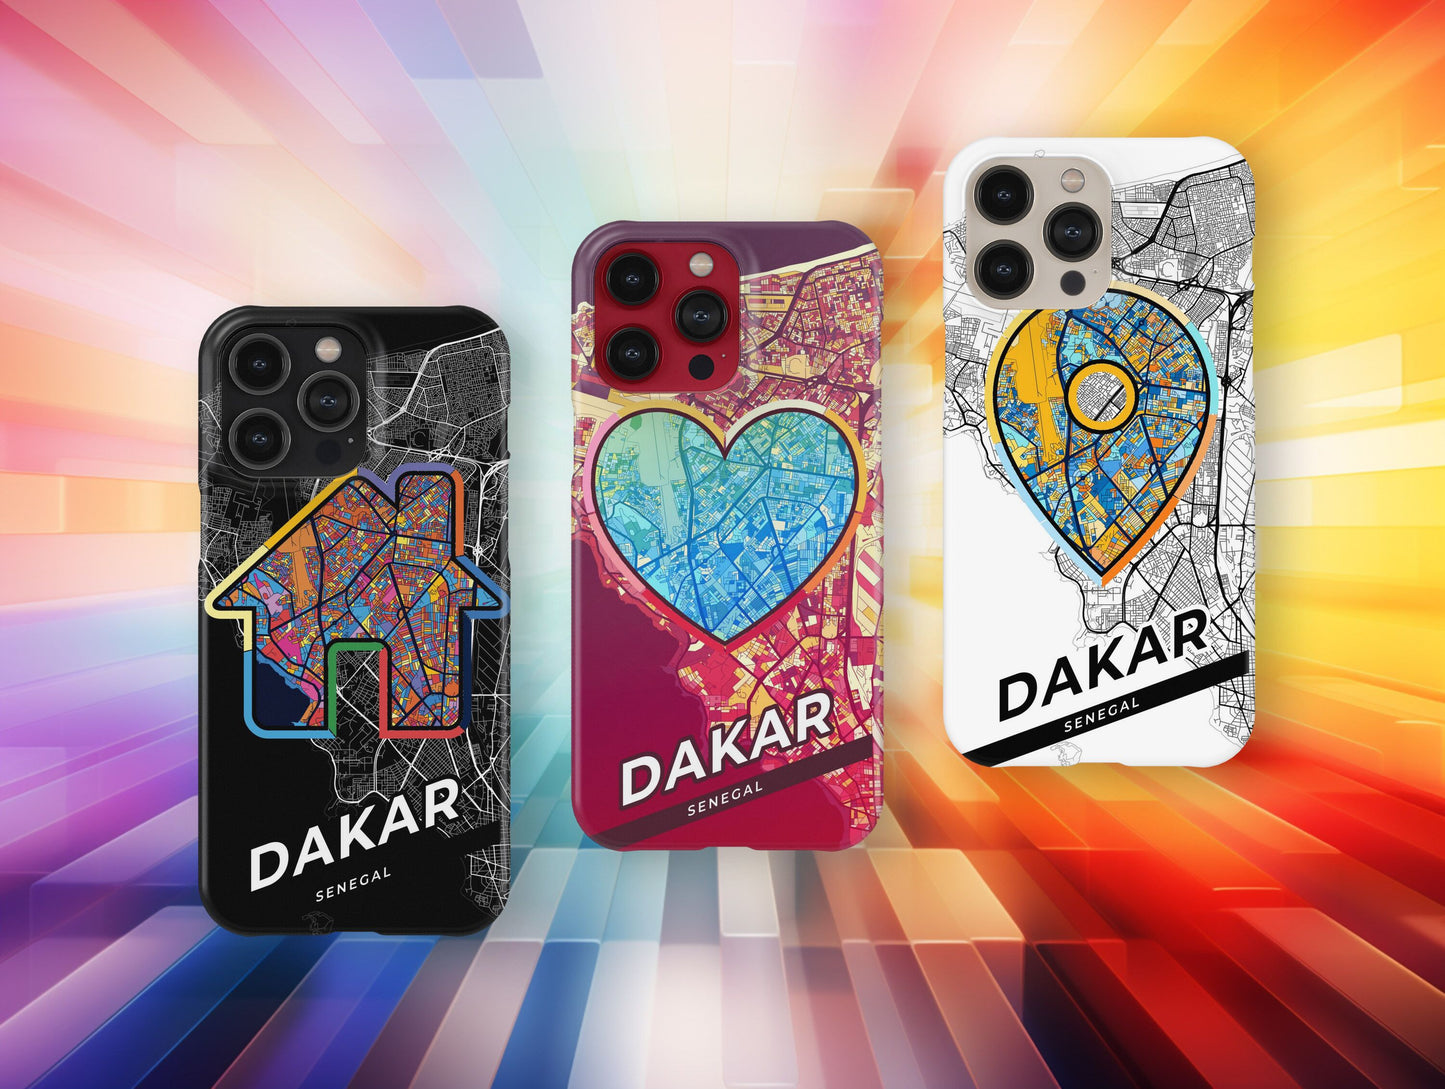 Dakar Senegal slim phone case with colorful icon. Birthday, wedding or housewarming gift. Couple match cases.